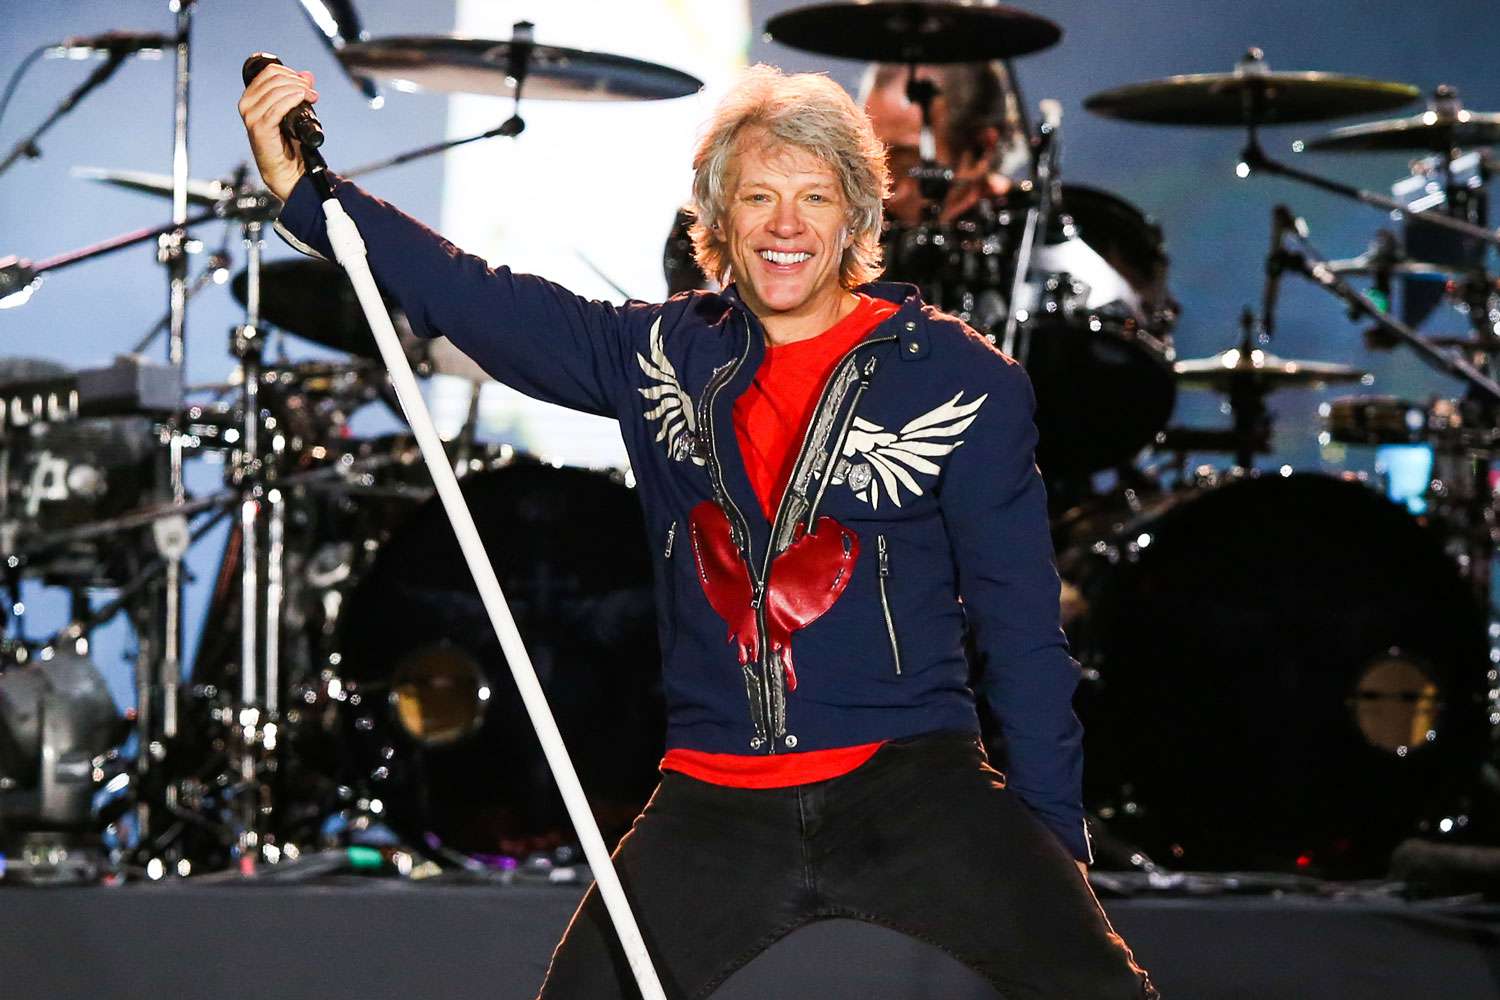 Jon Bon Jovi of the band Bon Jovi performs on stage during Rock In Rio day 3 at Cidade do Rock on September 29, 2019 in Rio de Janeiro, Brazil.